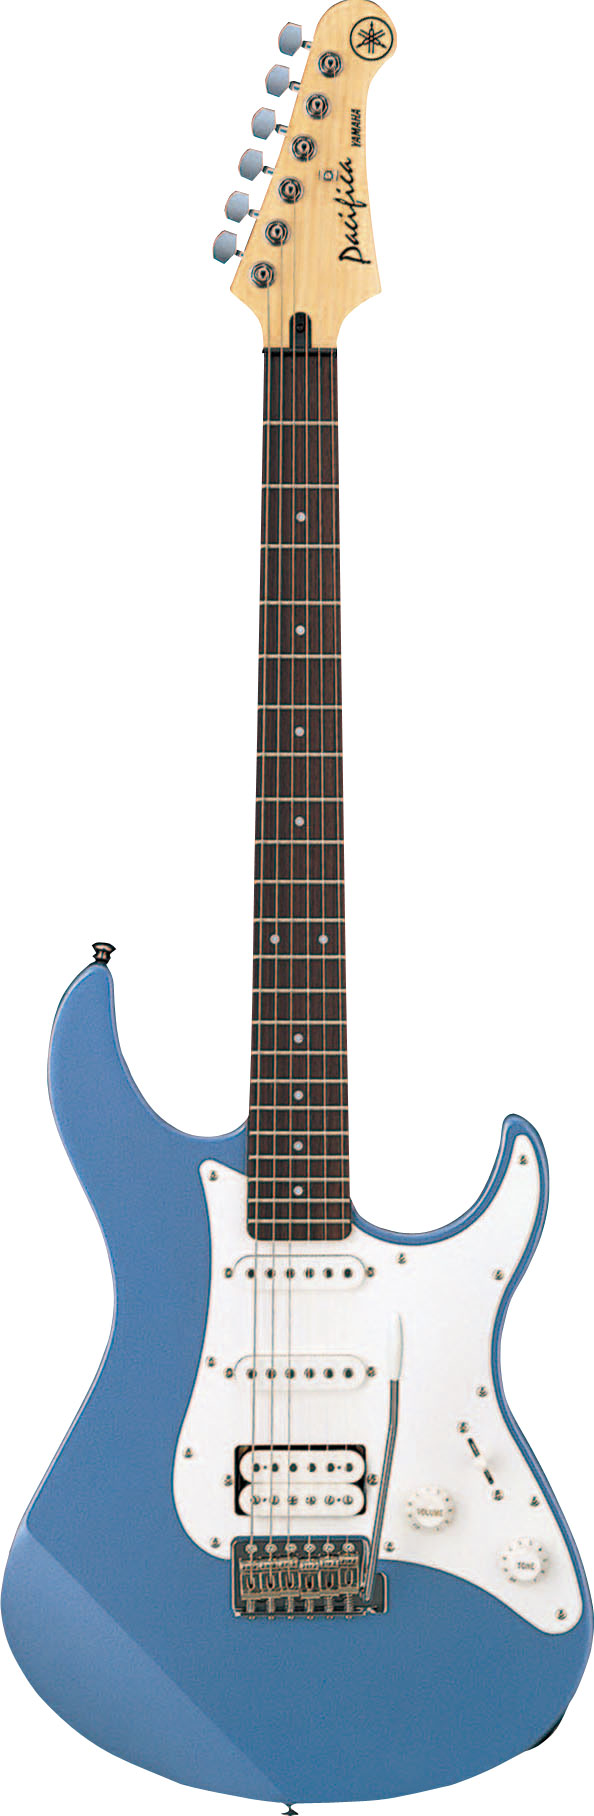 dan Electric guitar PACIFICA112J mau xanh